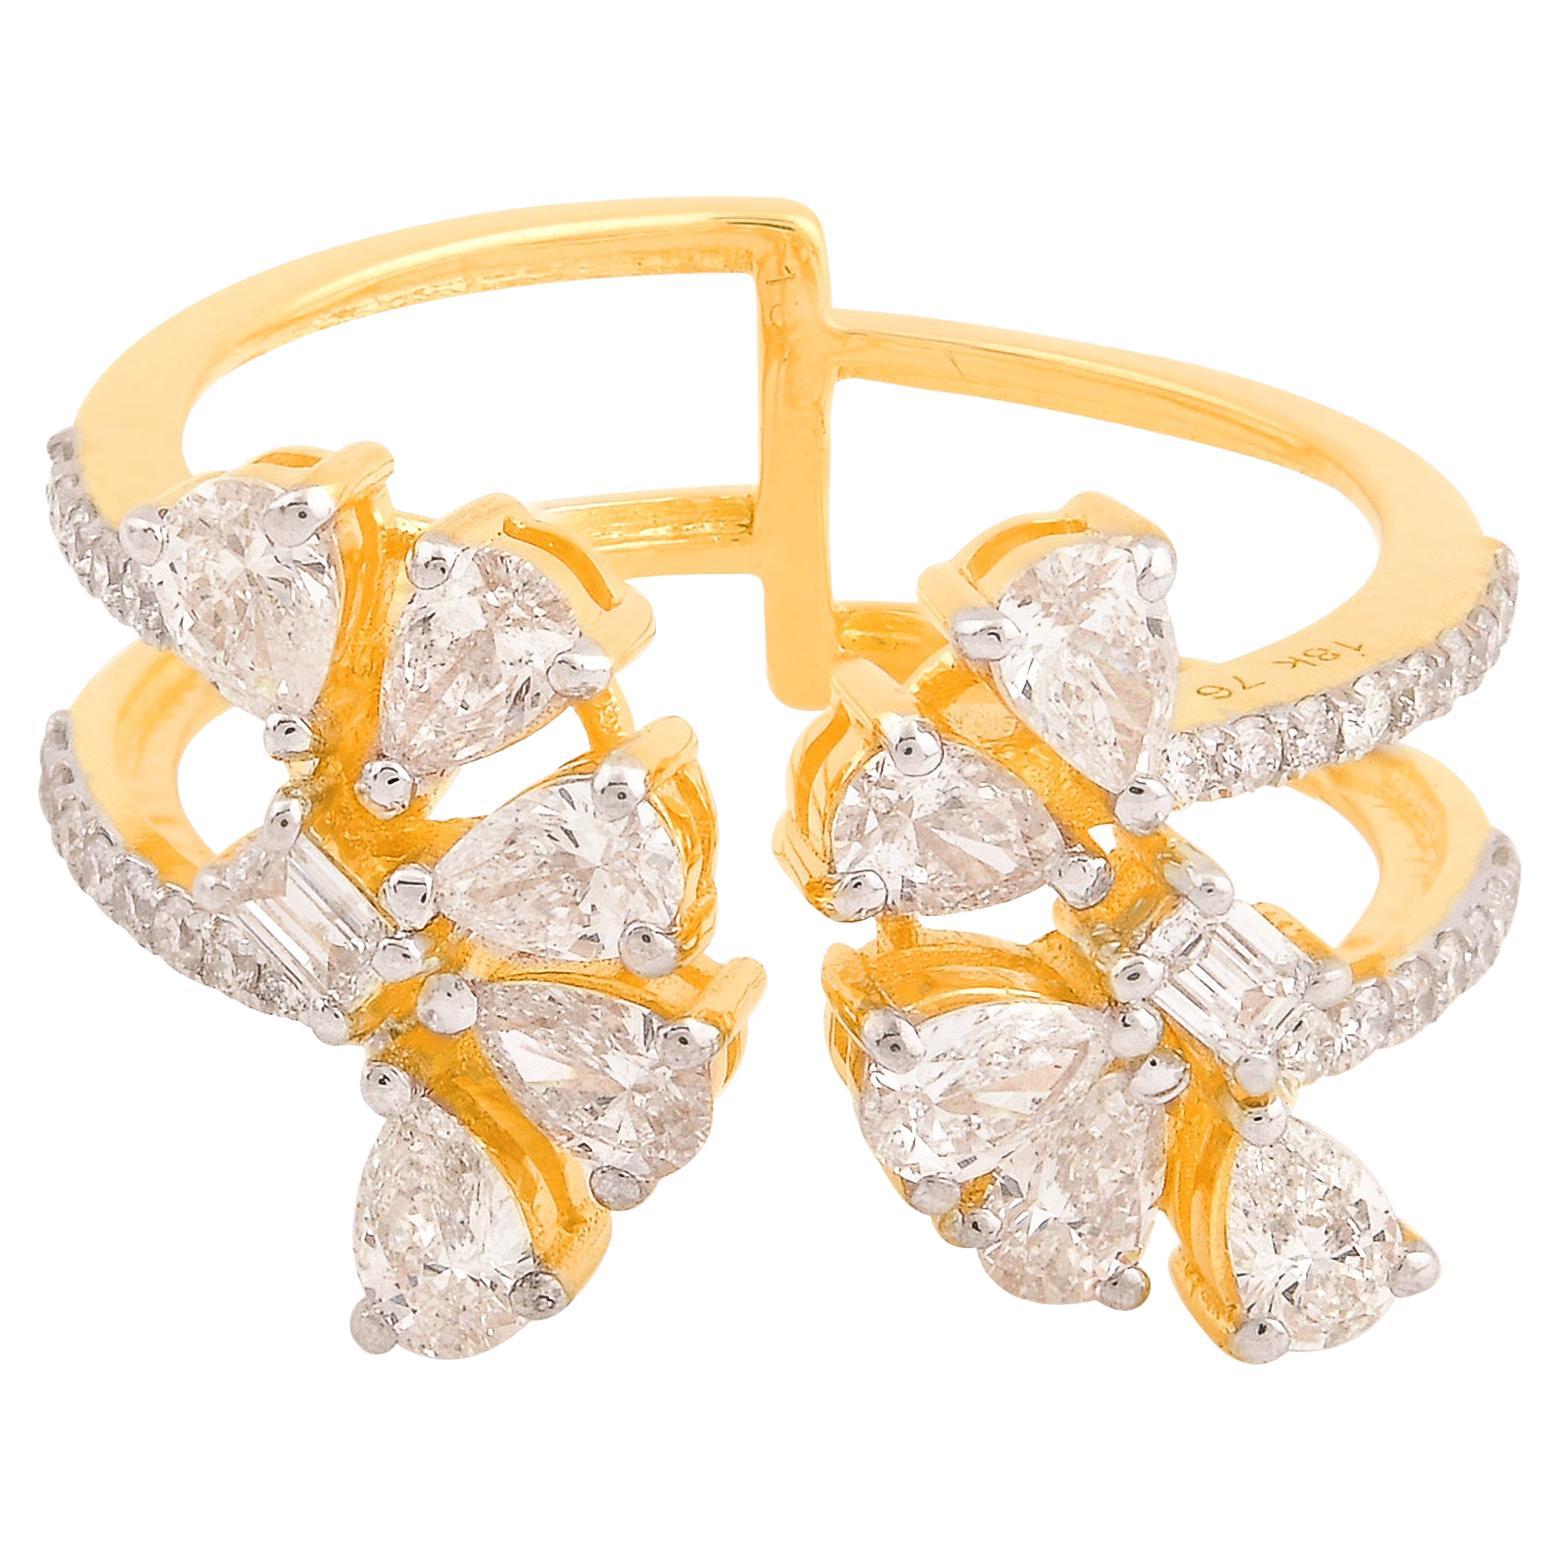 Natural 1.13 Carat Pear Diamond Cuff Ring Solid 18k Yellow Gold Handmade Jewelry